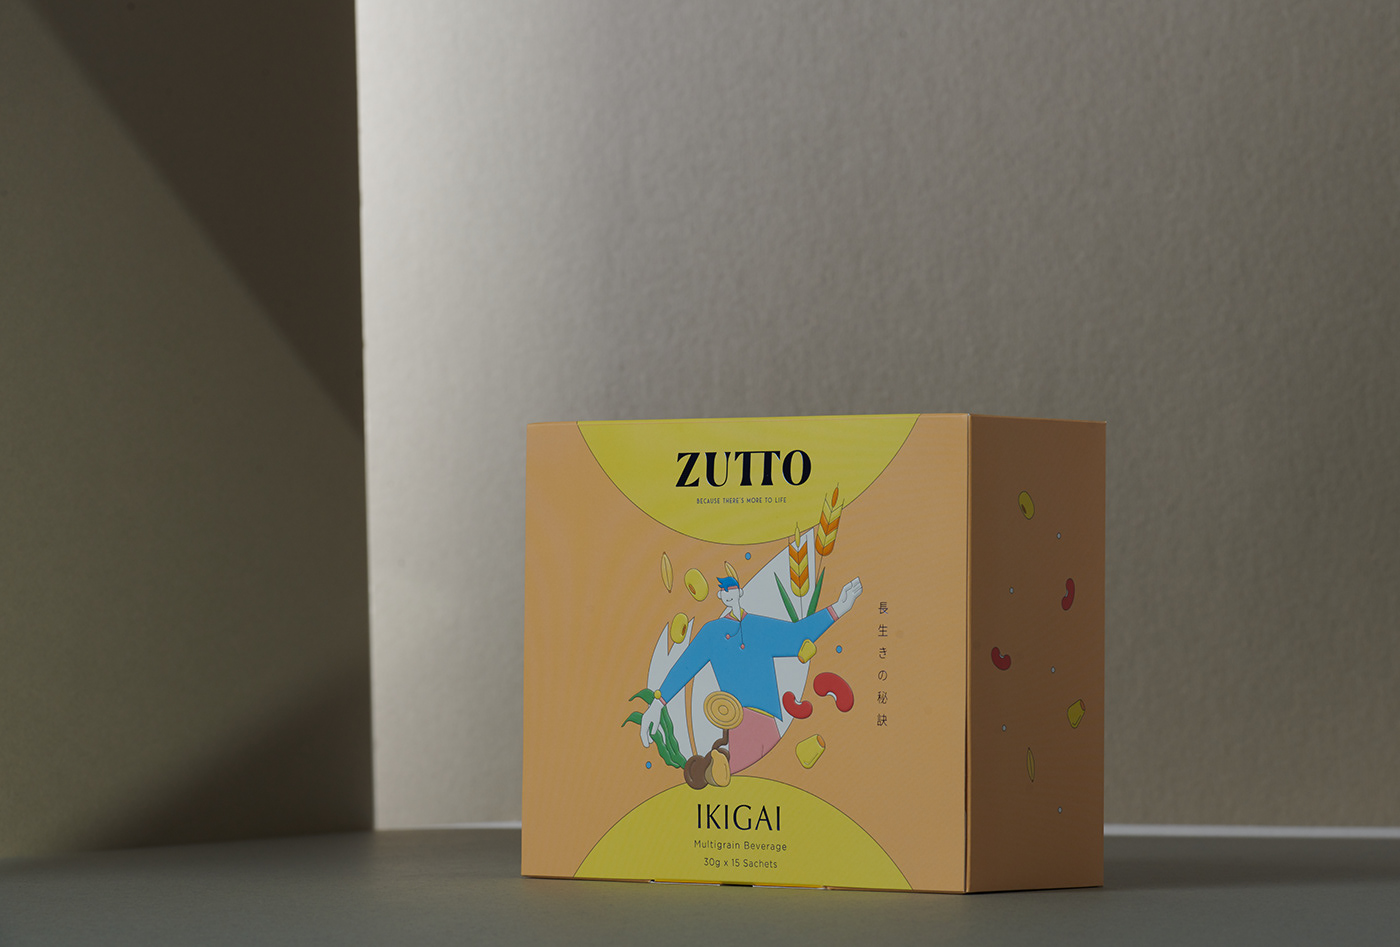 ZUTTO 健康保健品包装设计 via:tsubakistudio